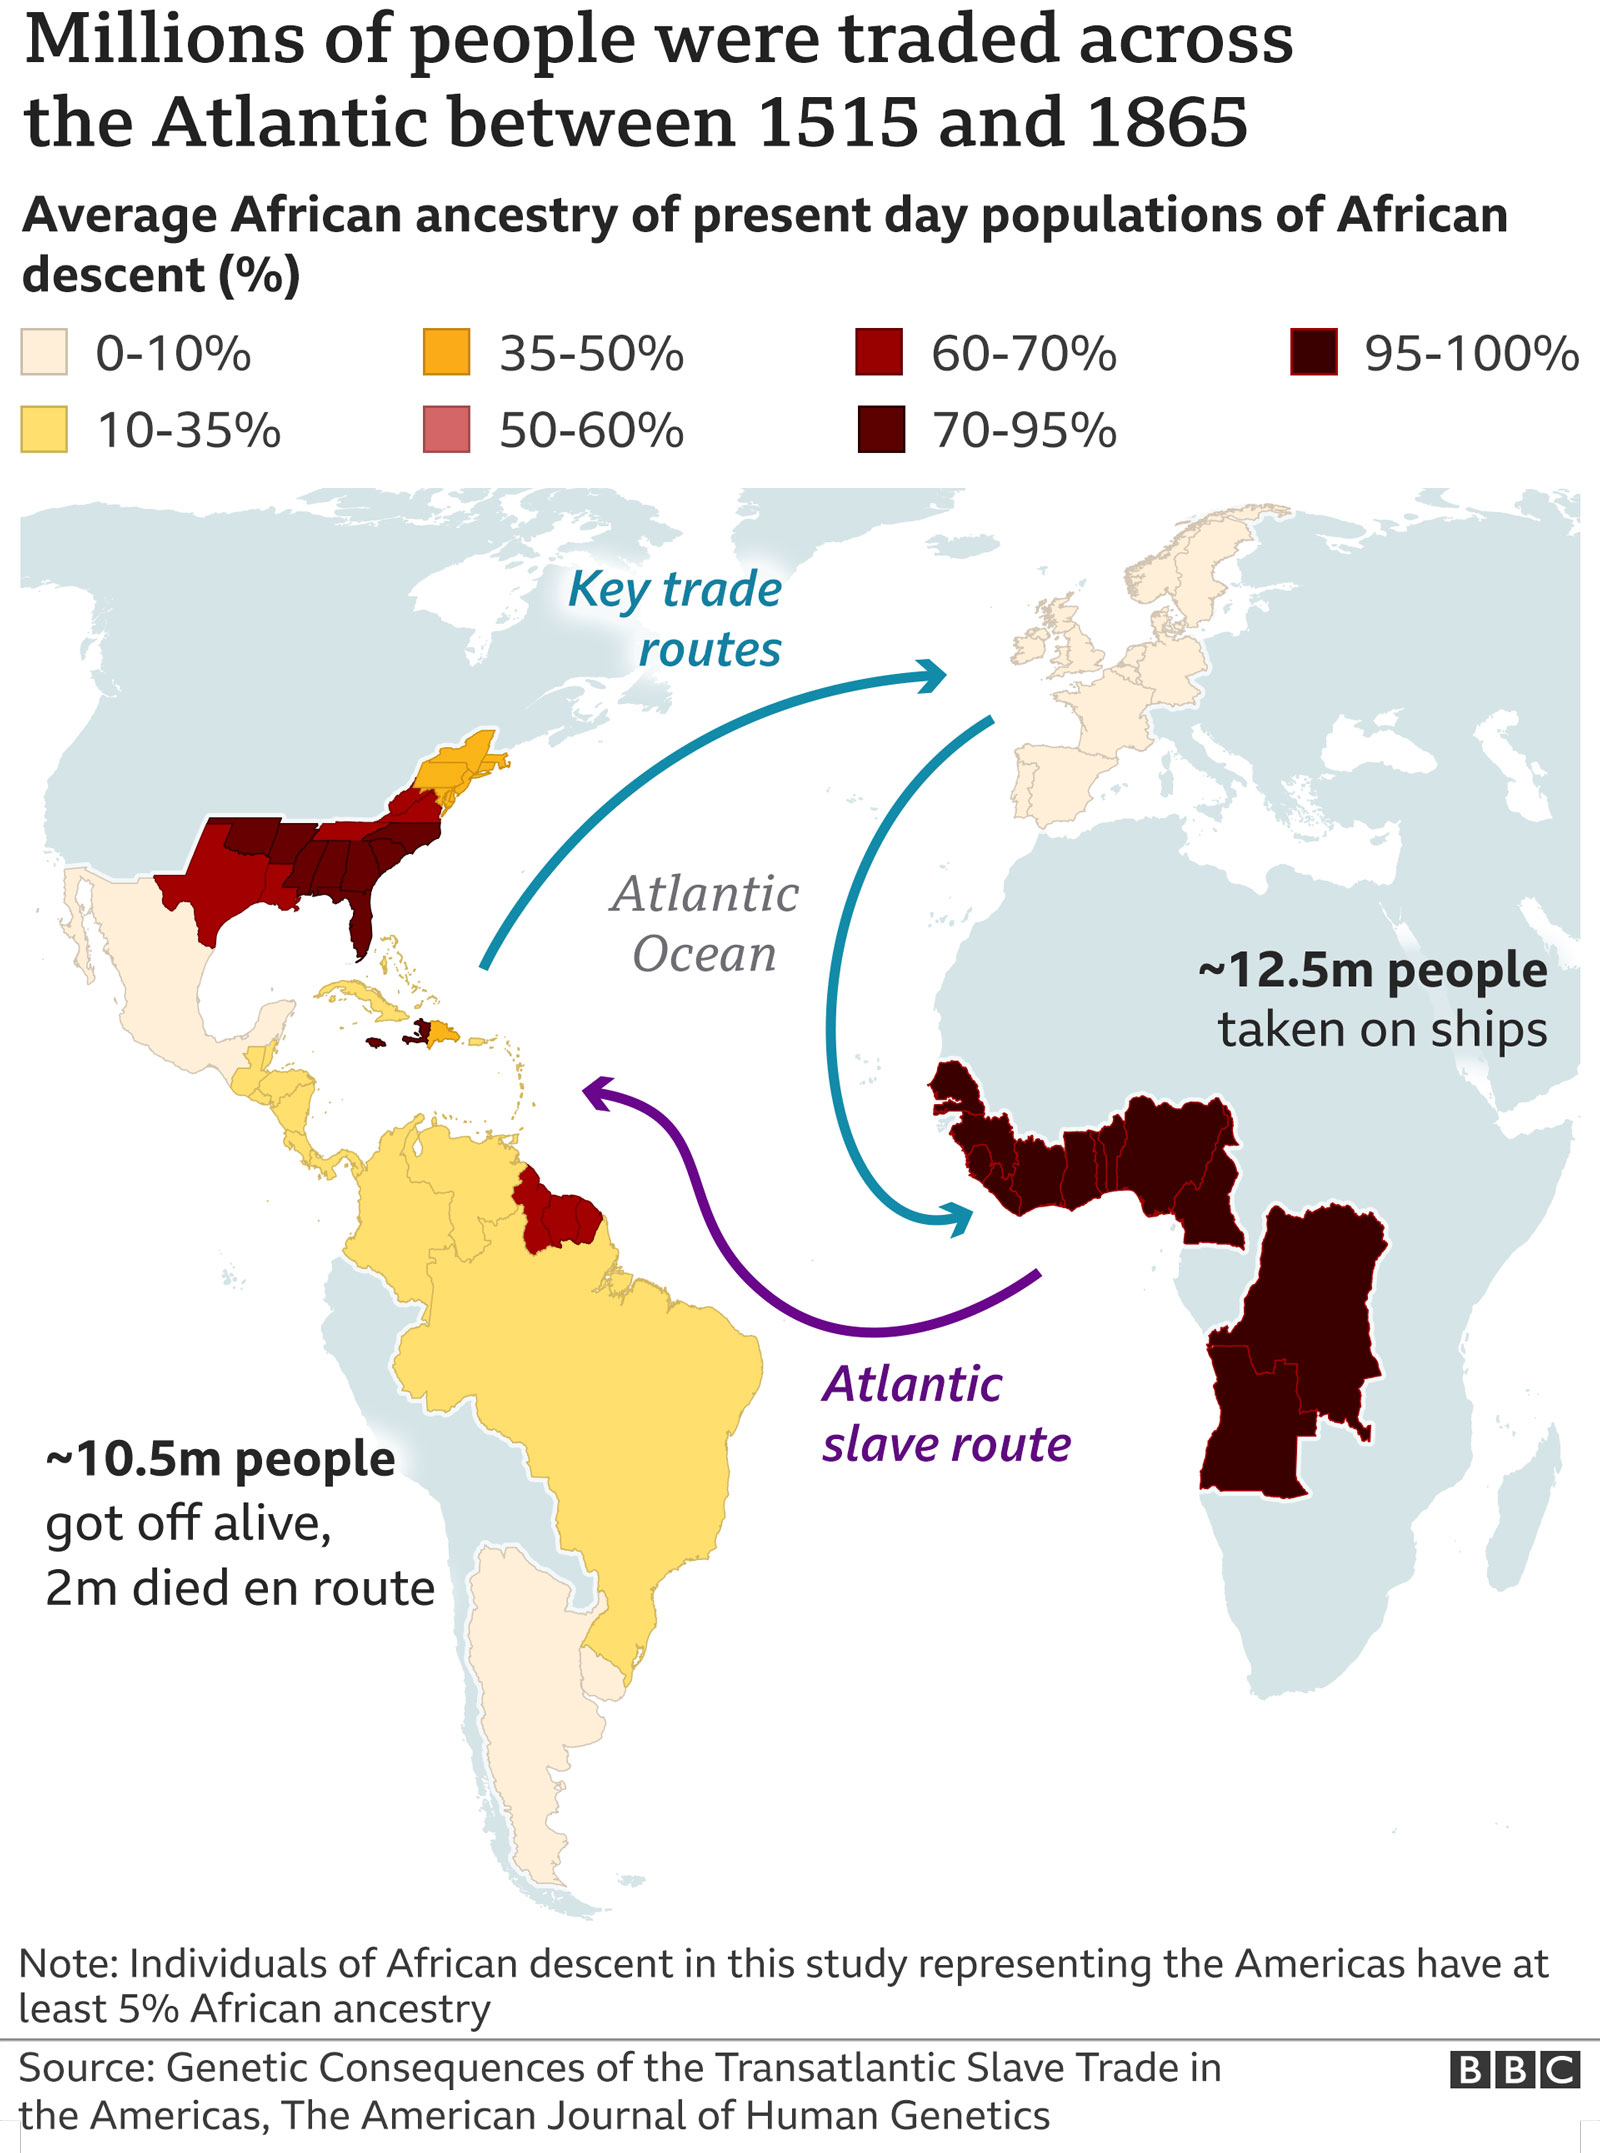 Transatlantic slave trade routes